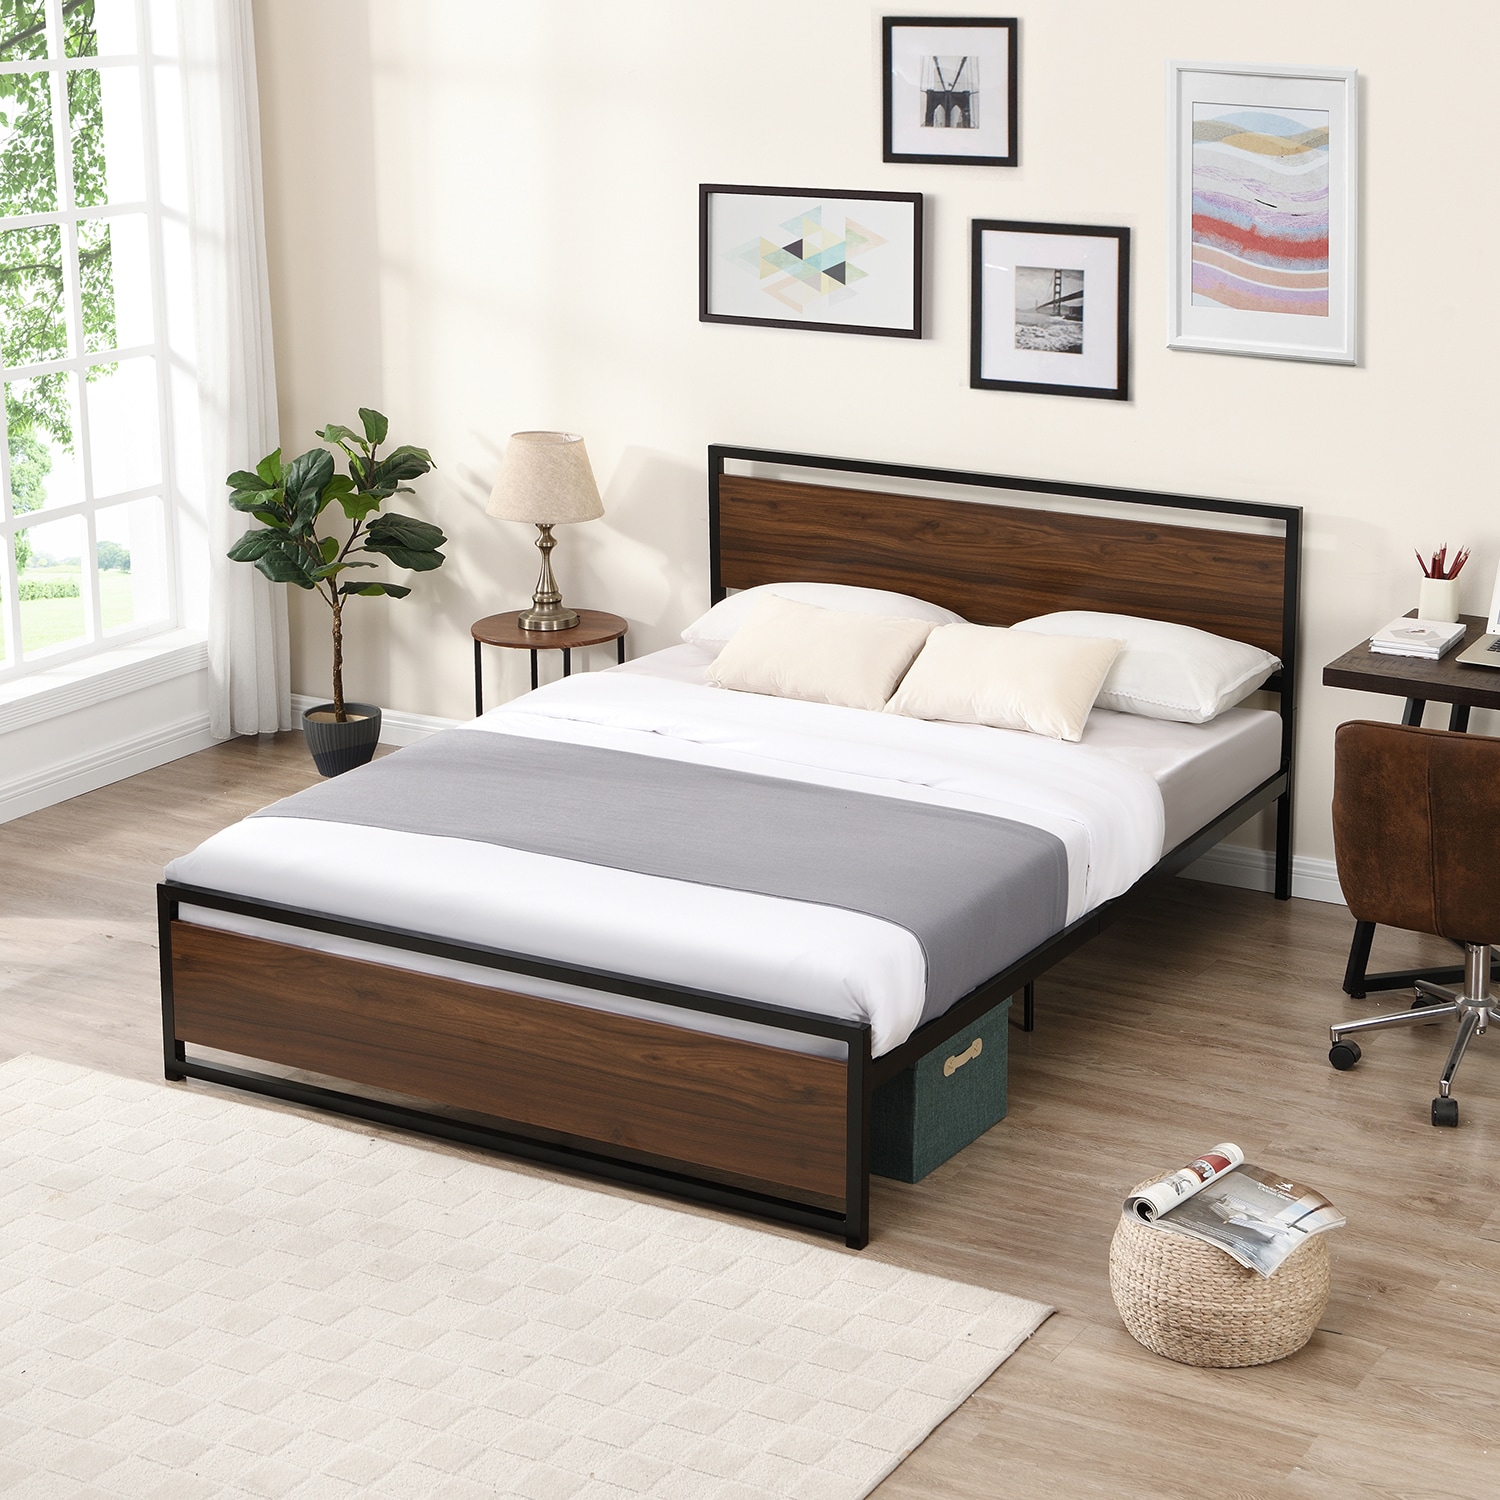 GZMR Industrial Platform Full Bed Frame Brown Full Metal Bed Frame with ...